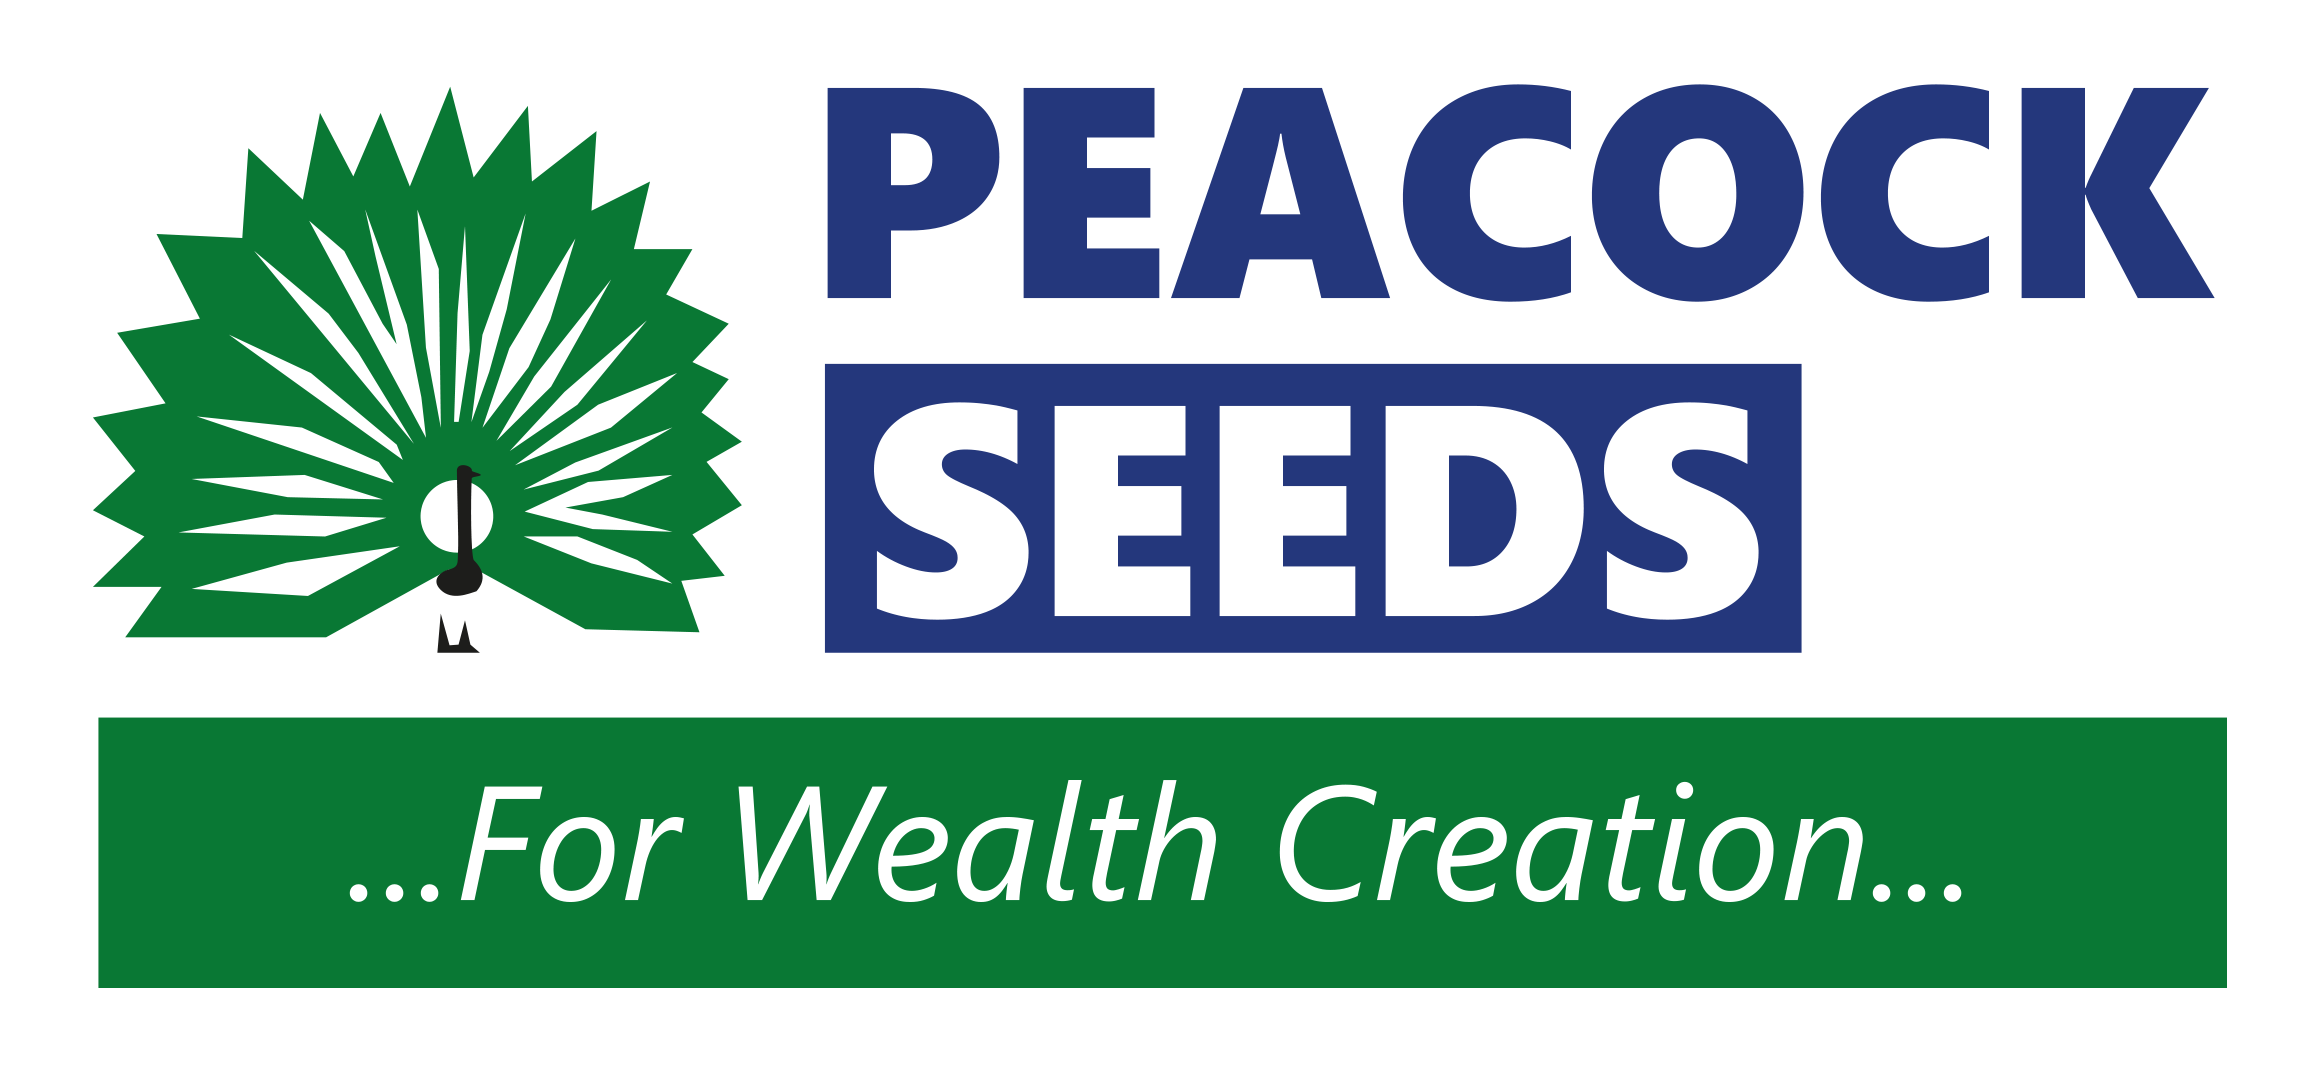 Peacock Seeds